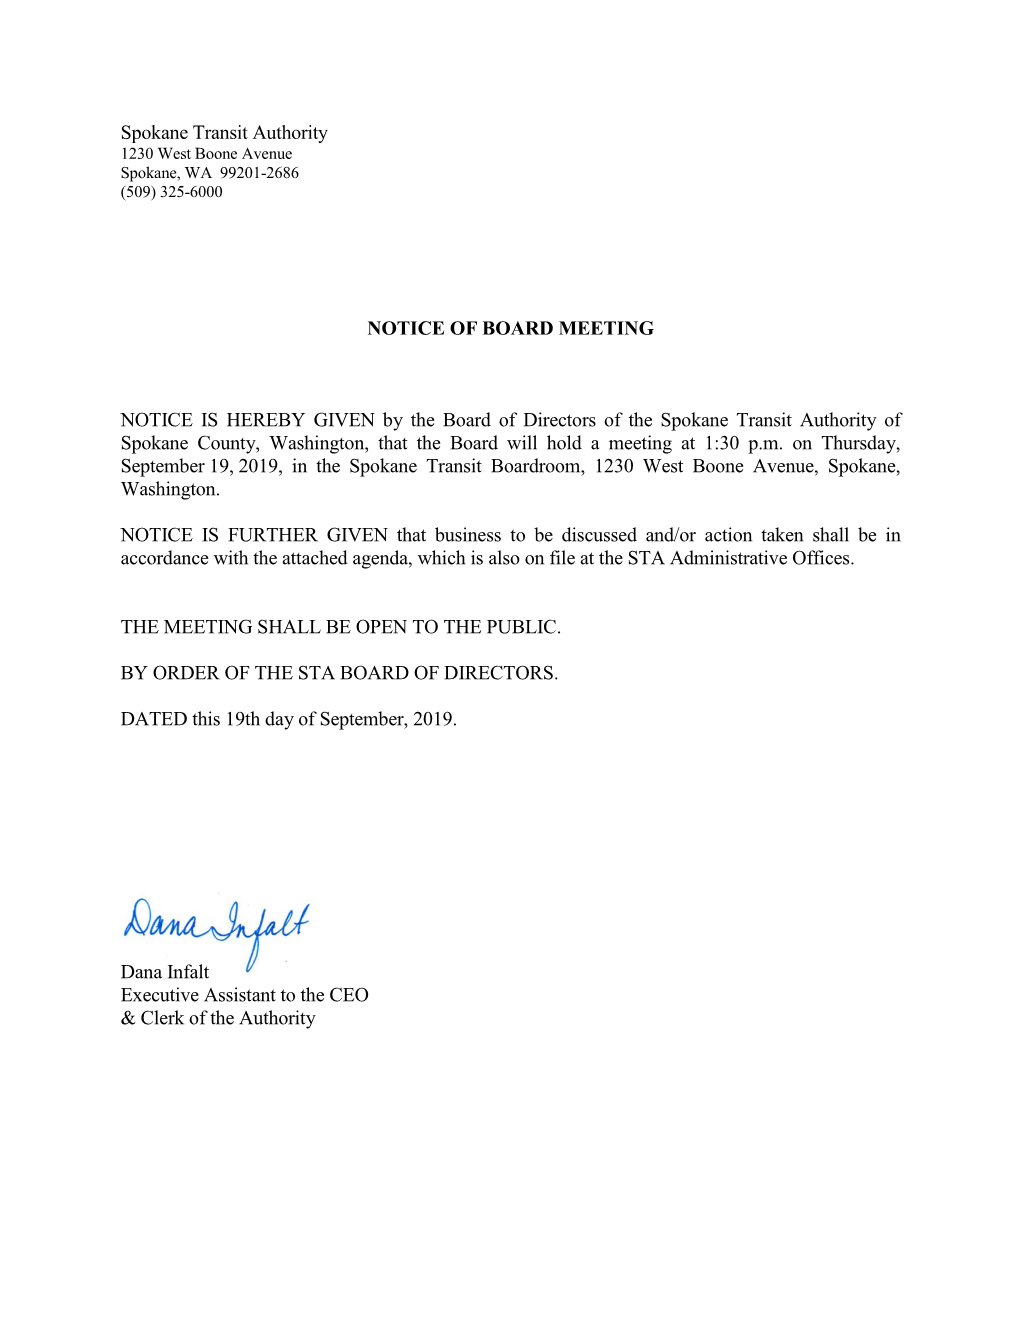 Notice of Board Meeting